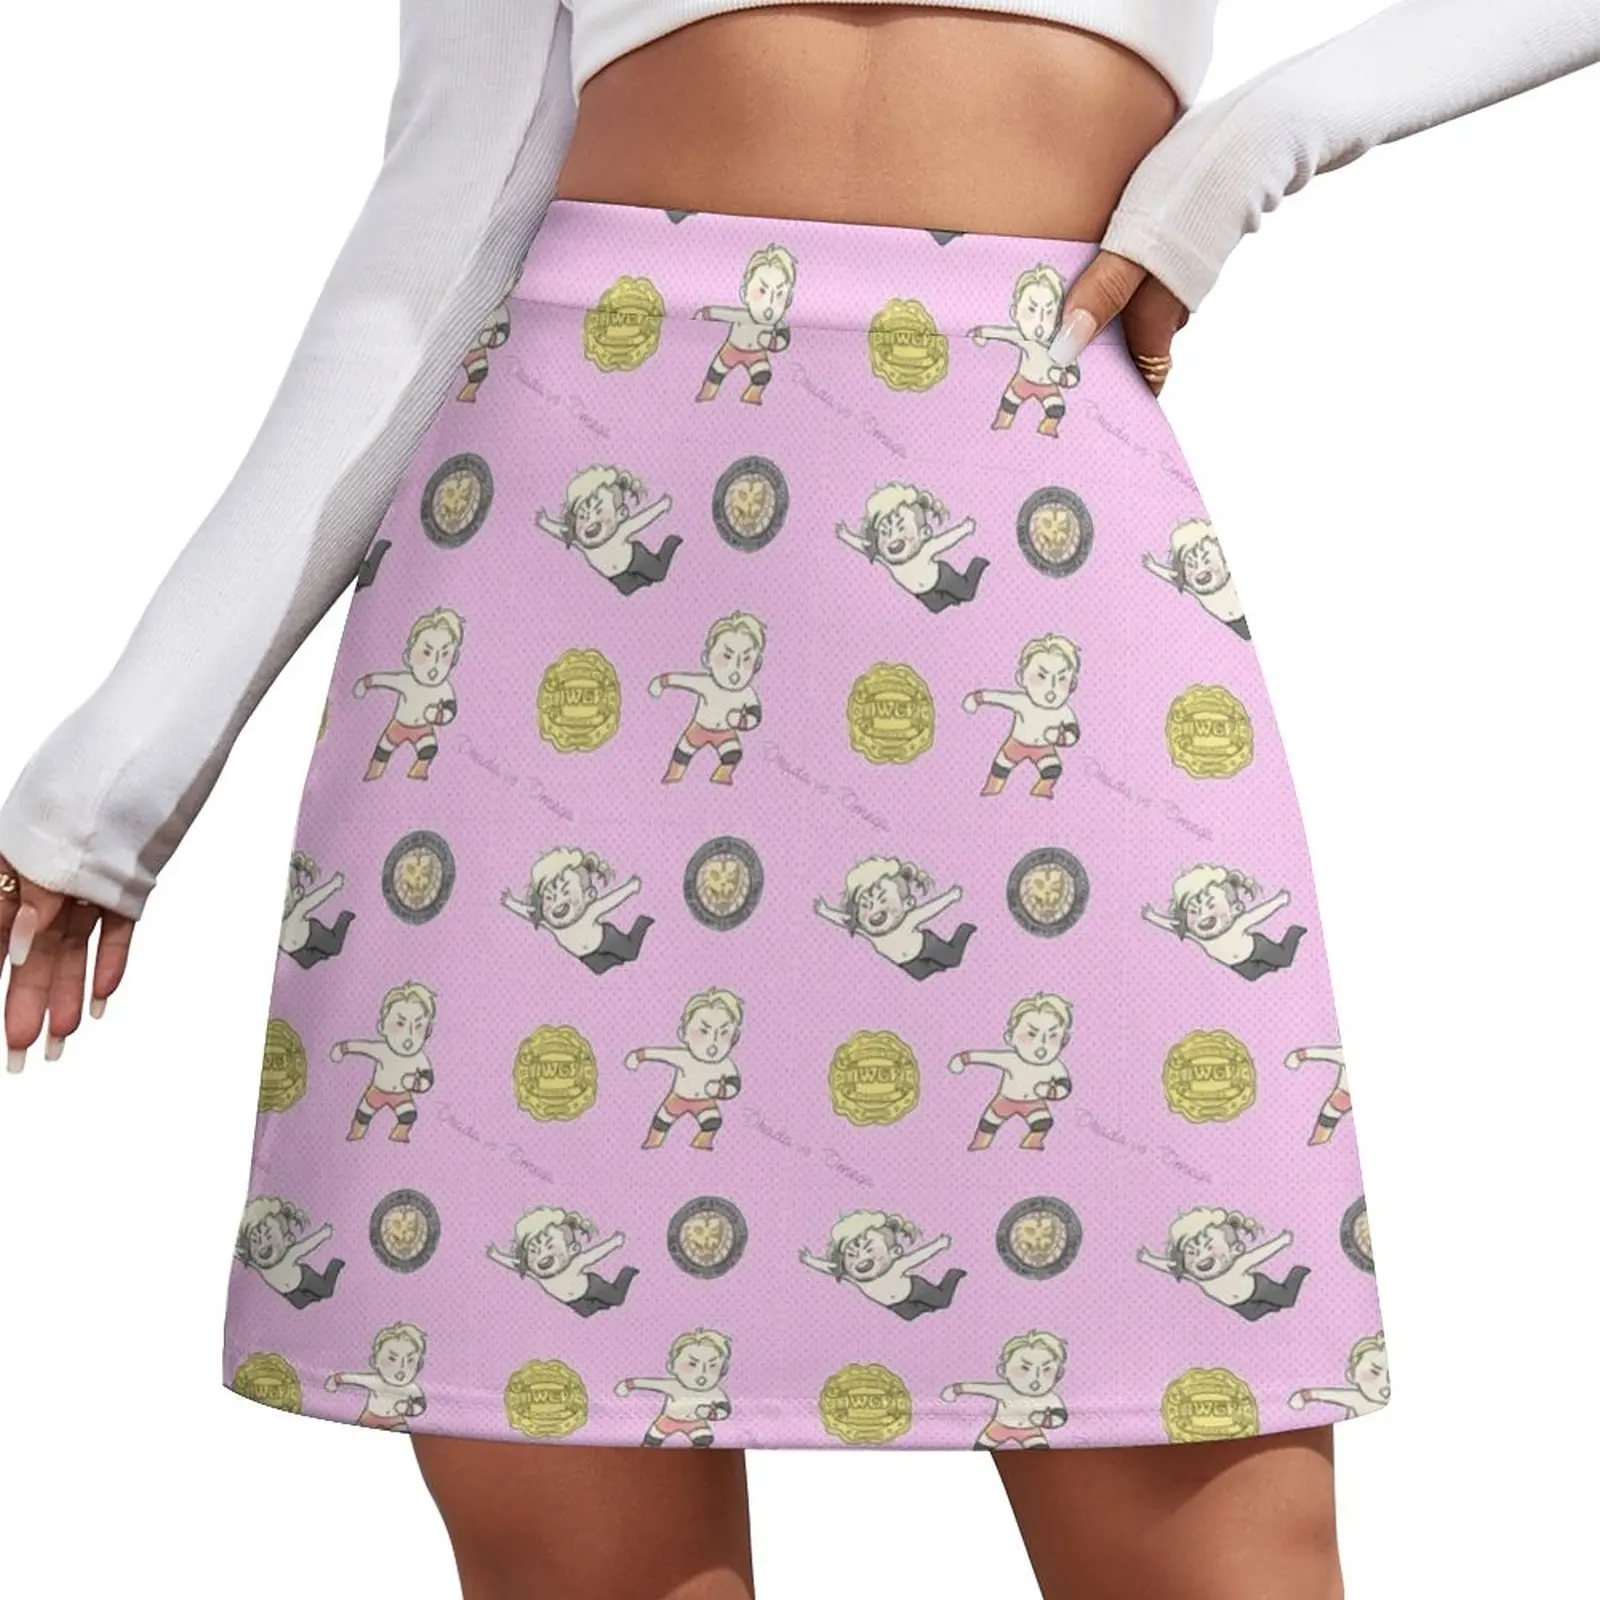 Okada vs Omega Mini Skirt skirts fashion korean clothing skirt sets